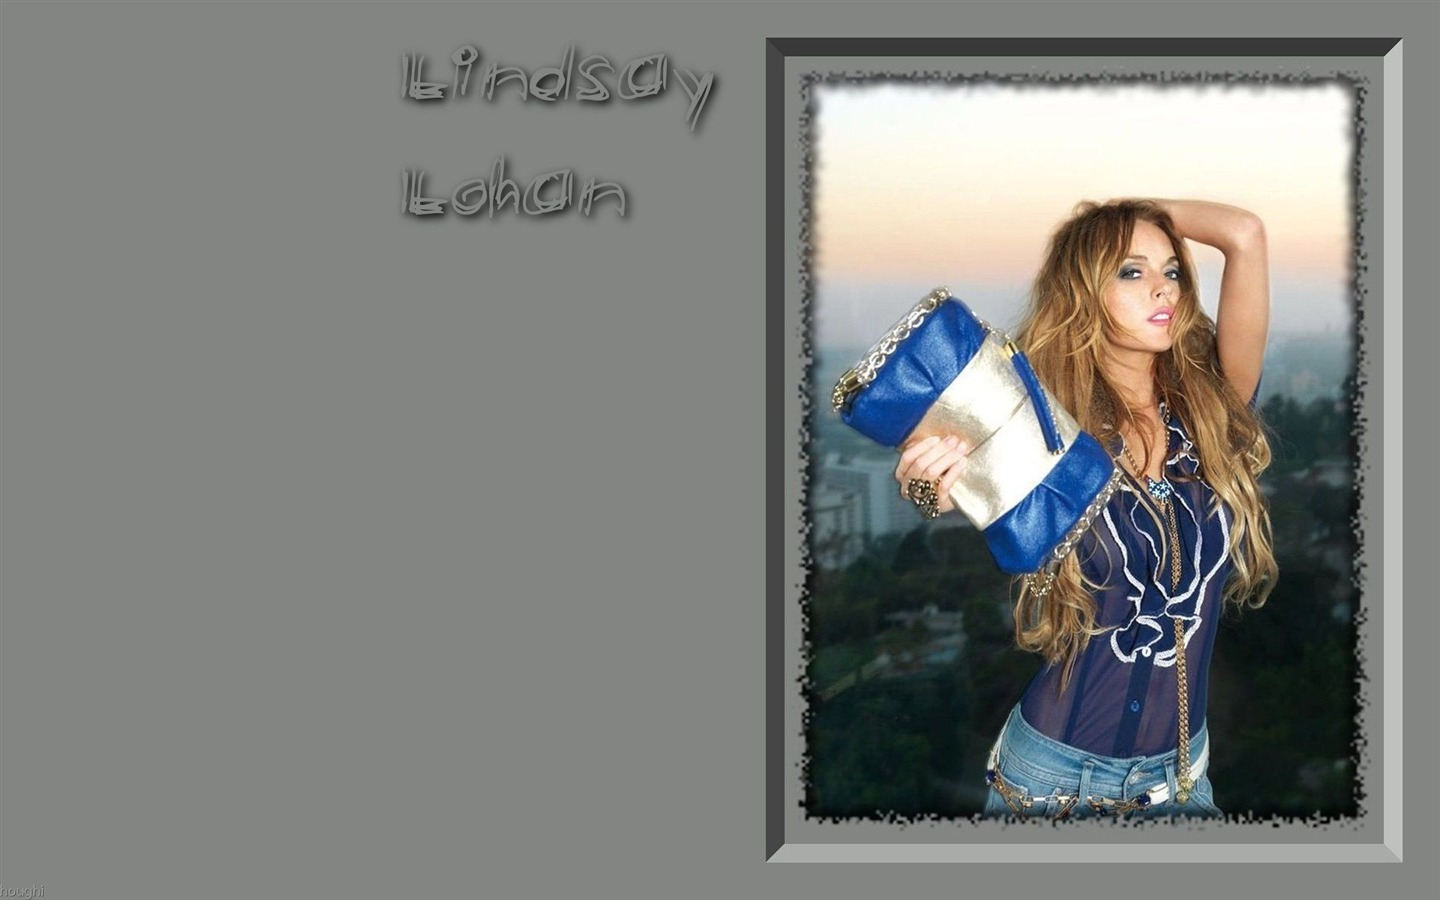 Lindsay Lohan beautiful wallpaper #18 - 1440x900